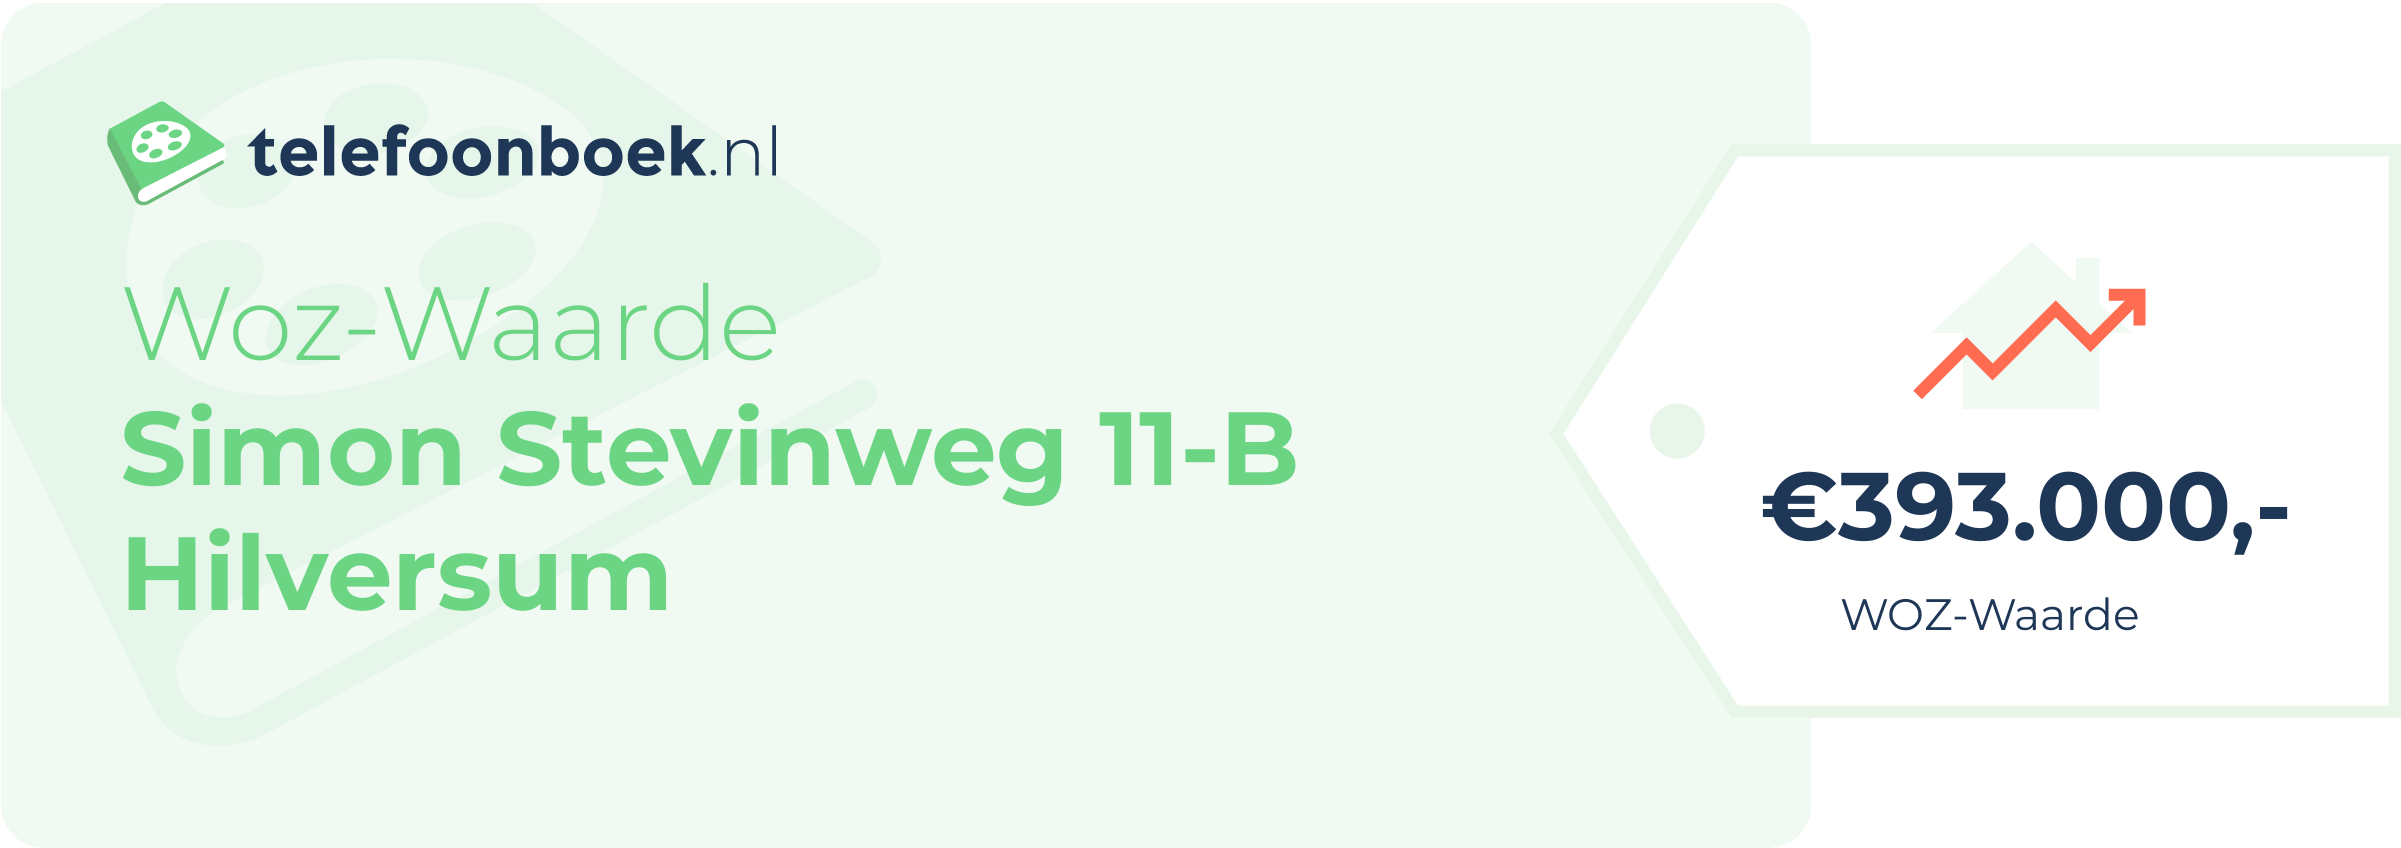 WOZ-waarde Simon Stevinweg 11-B Hilversum